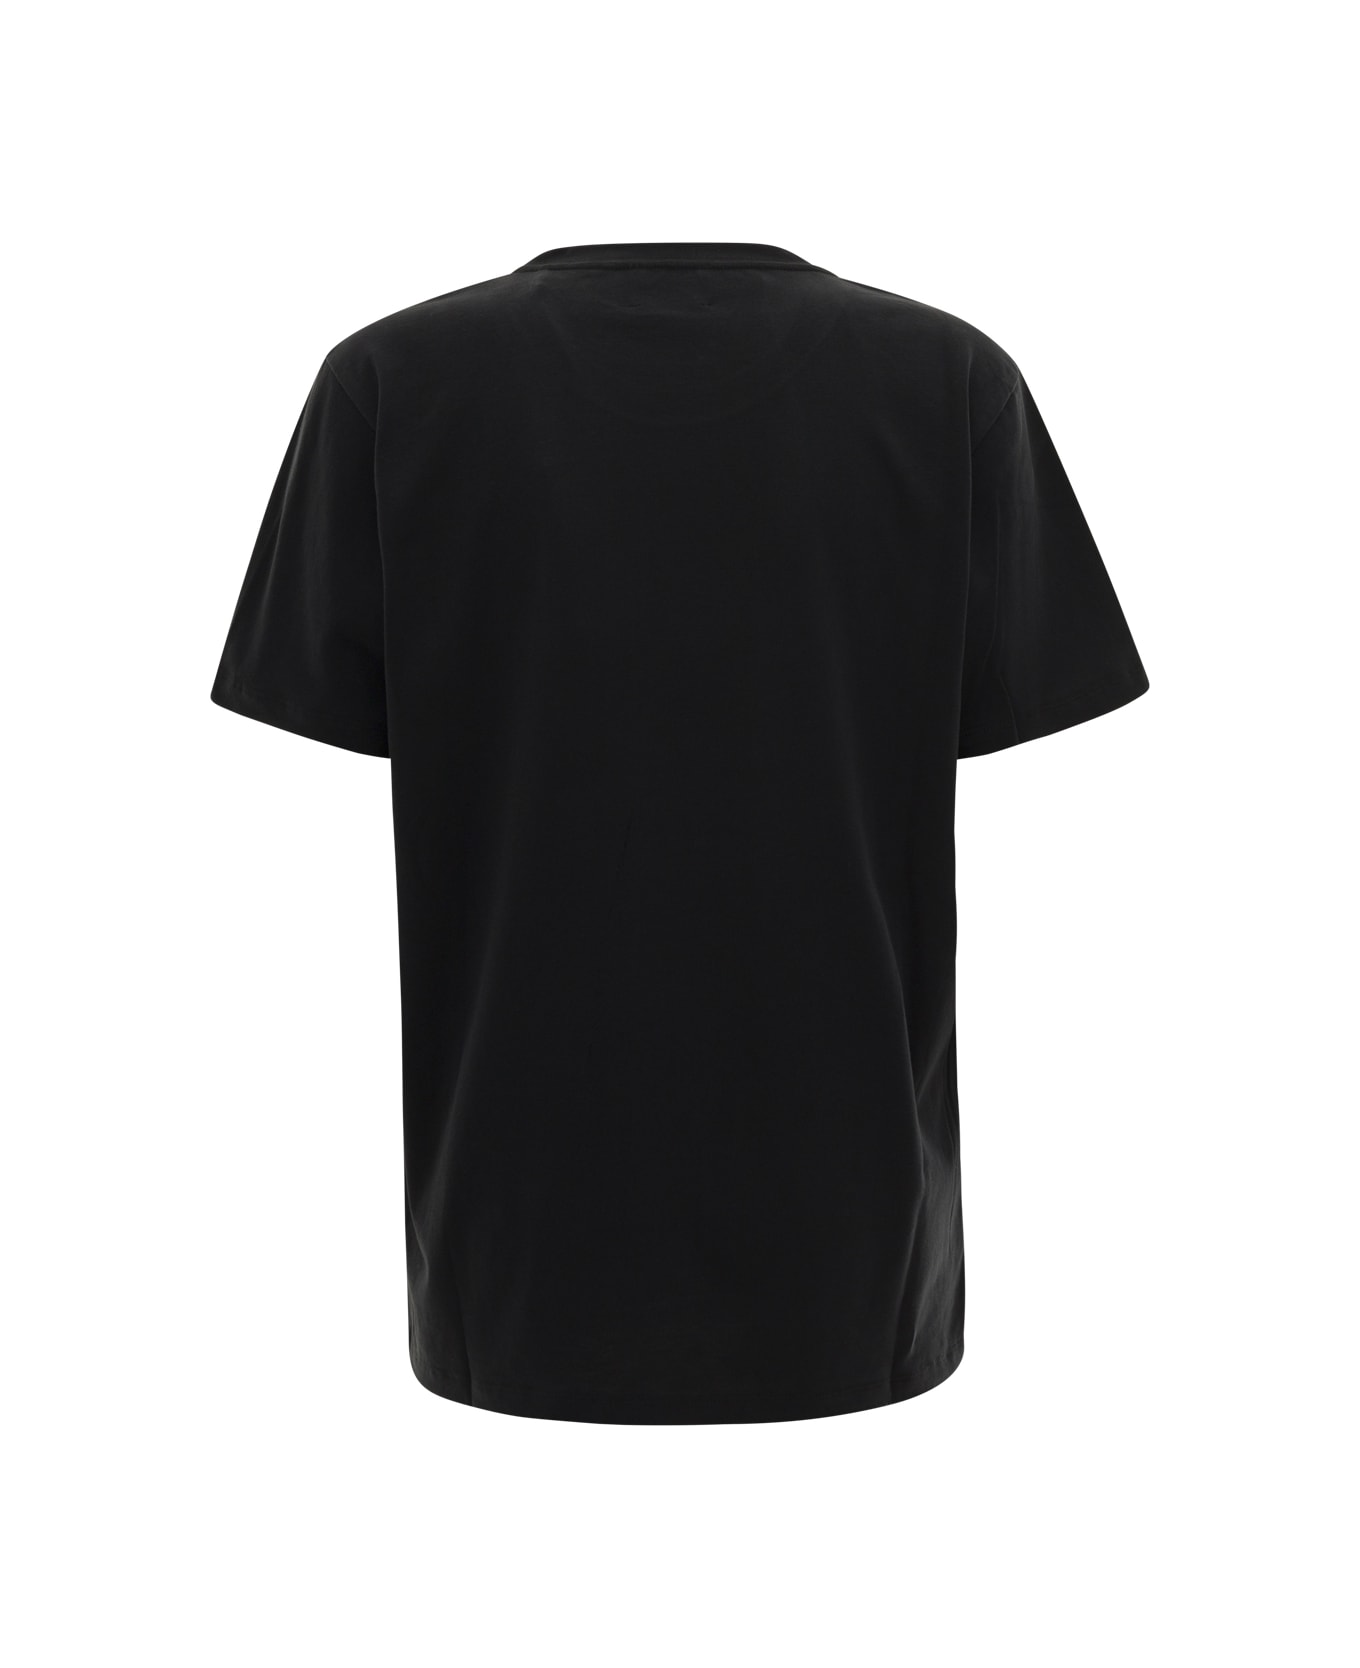 Marant Étoile 'enna' Black T-shirt With Multicolor Print In Cotton Woman Isabel Marant Etoile - Black